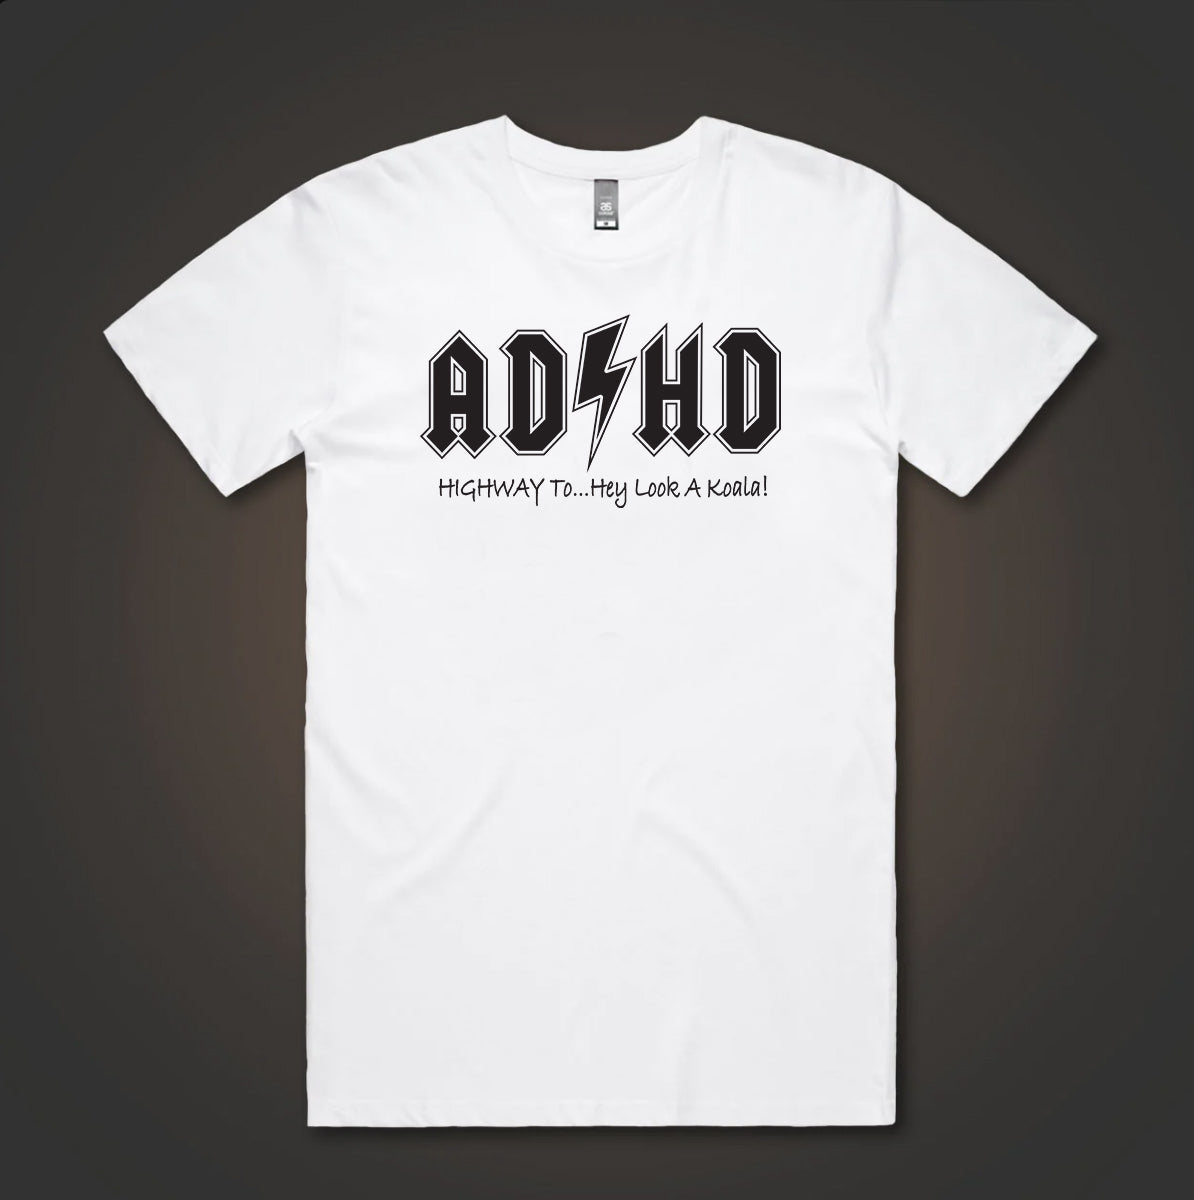 ADHD - Highway to.. Hey Look a Koala Guitarist T-Shirt